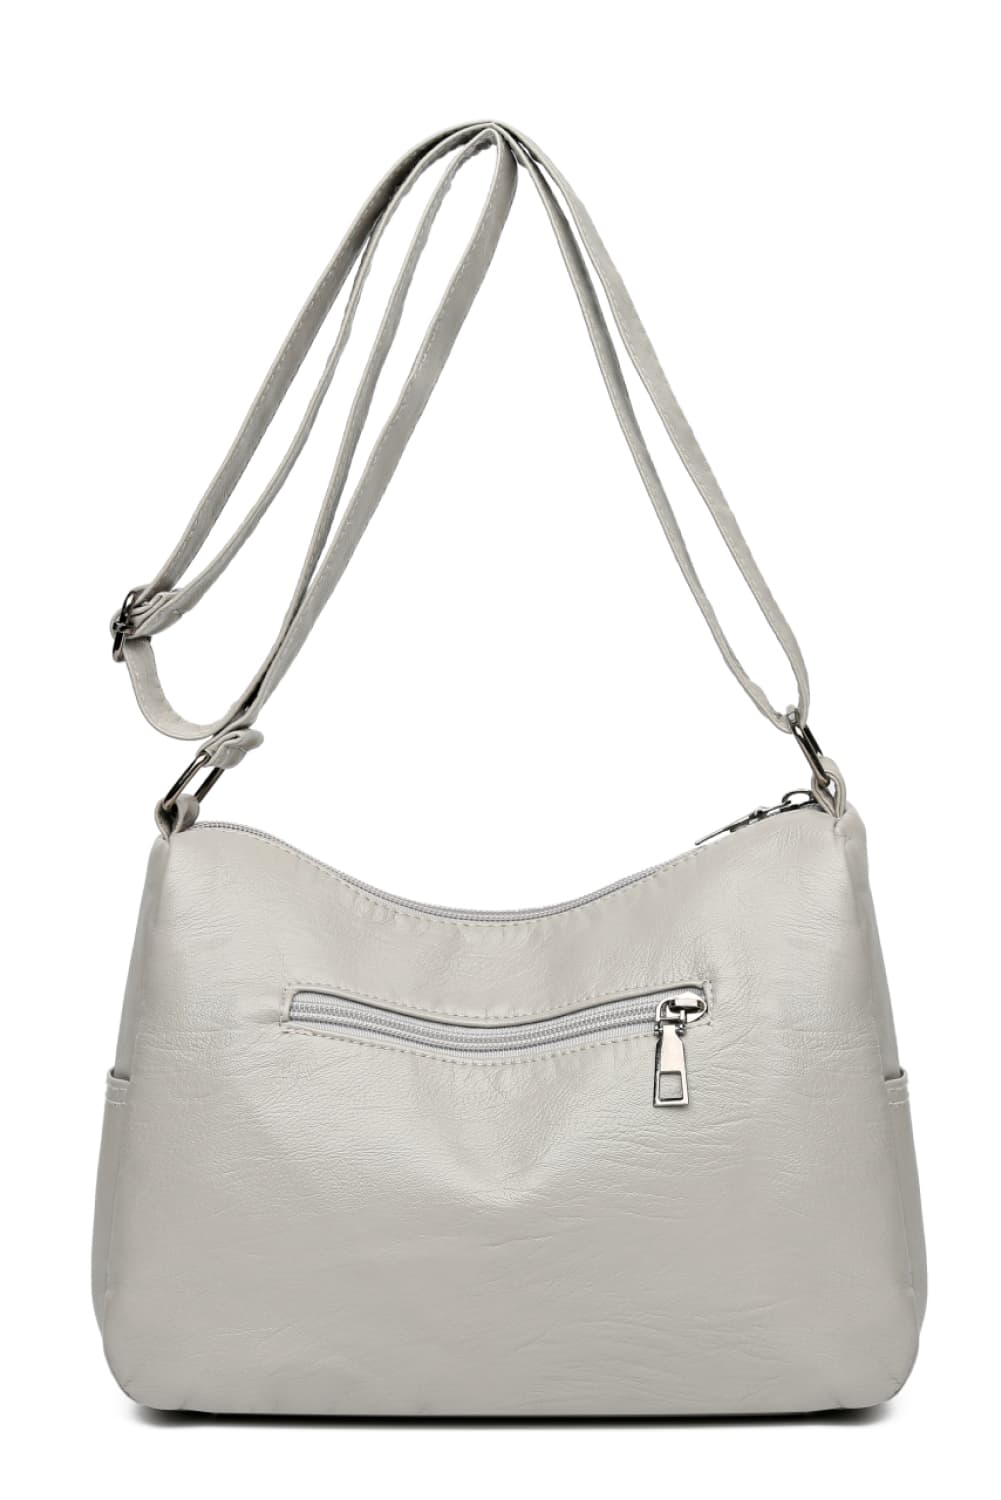 Multi-Pocket PU Leather Crossbody Bag | Sugarz Chique Boutique